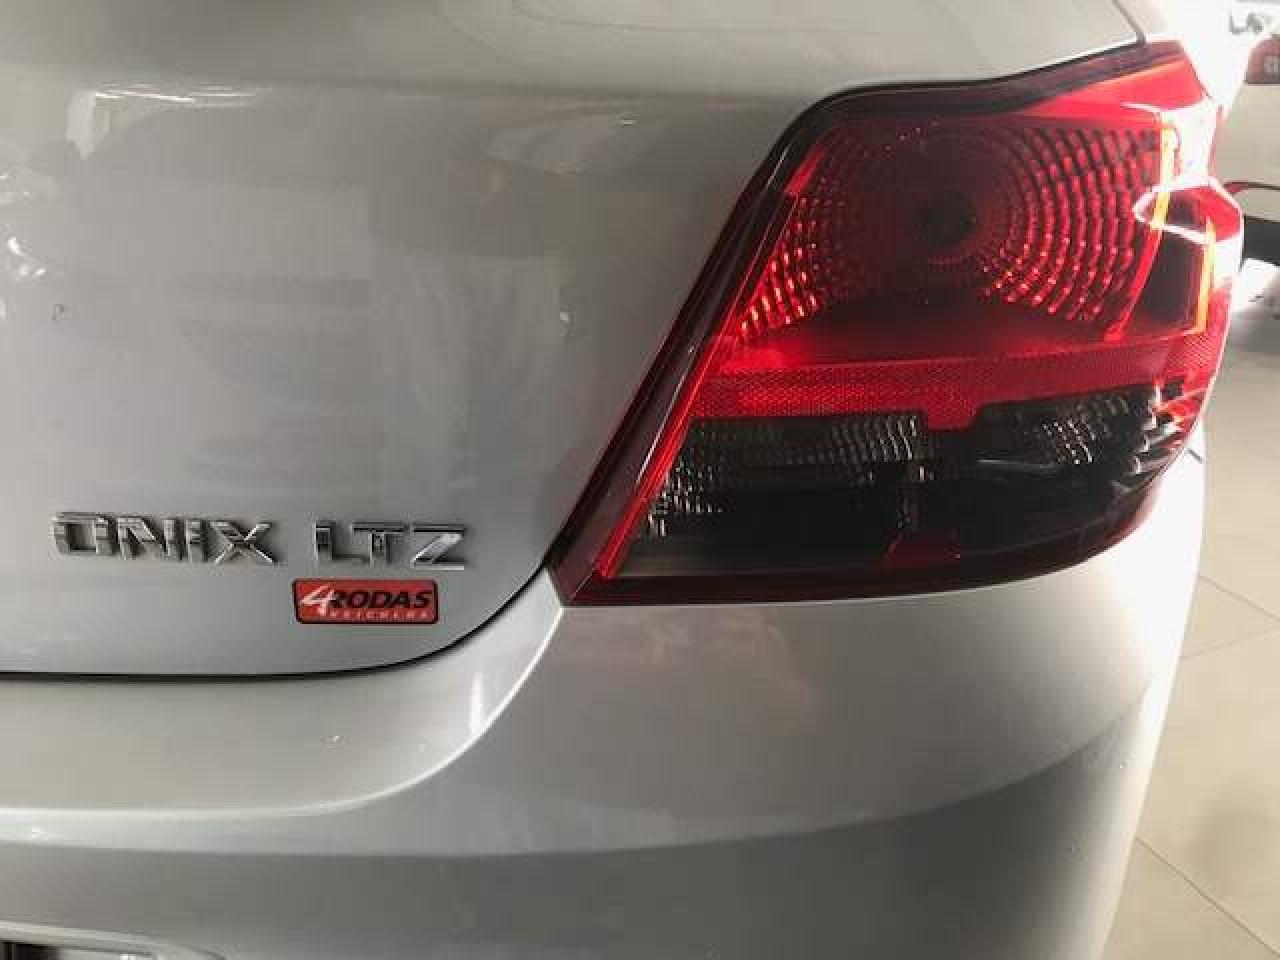 Onix Hatch 1.4 4P FLEX LTZ